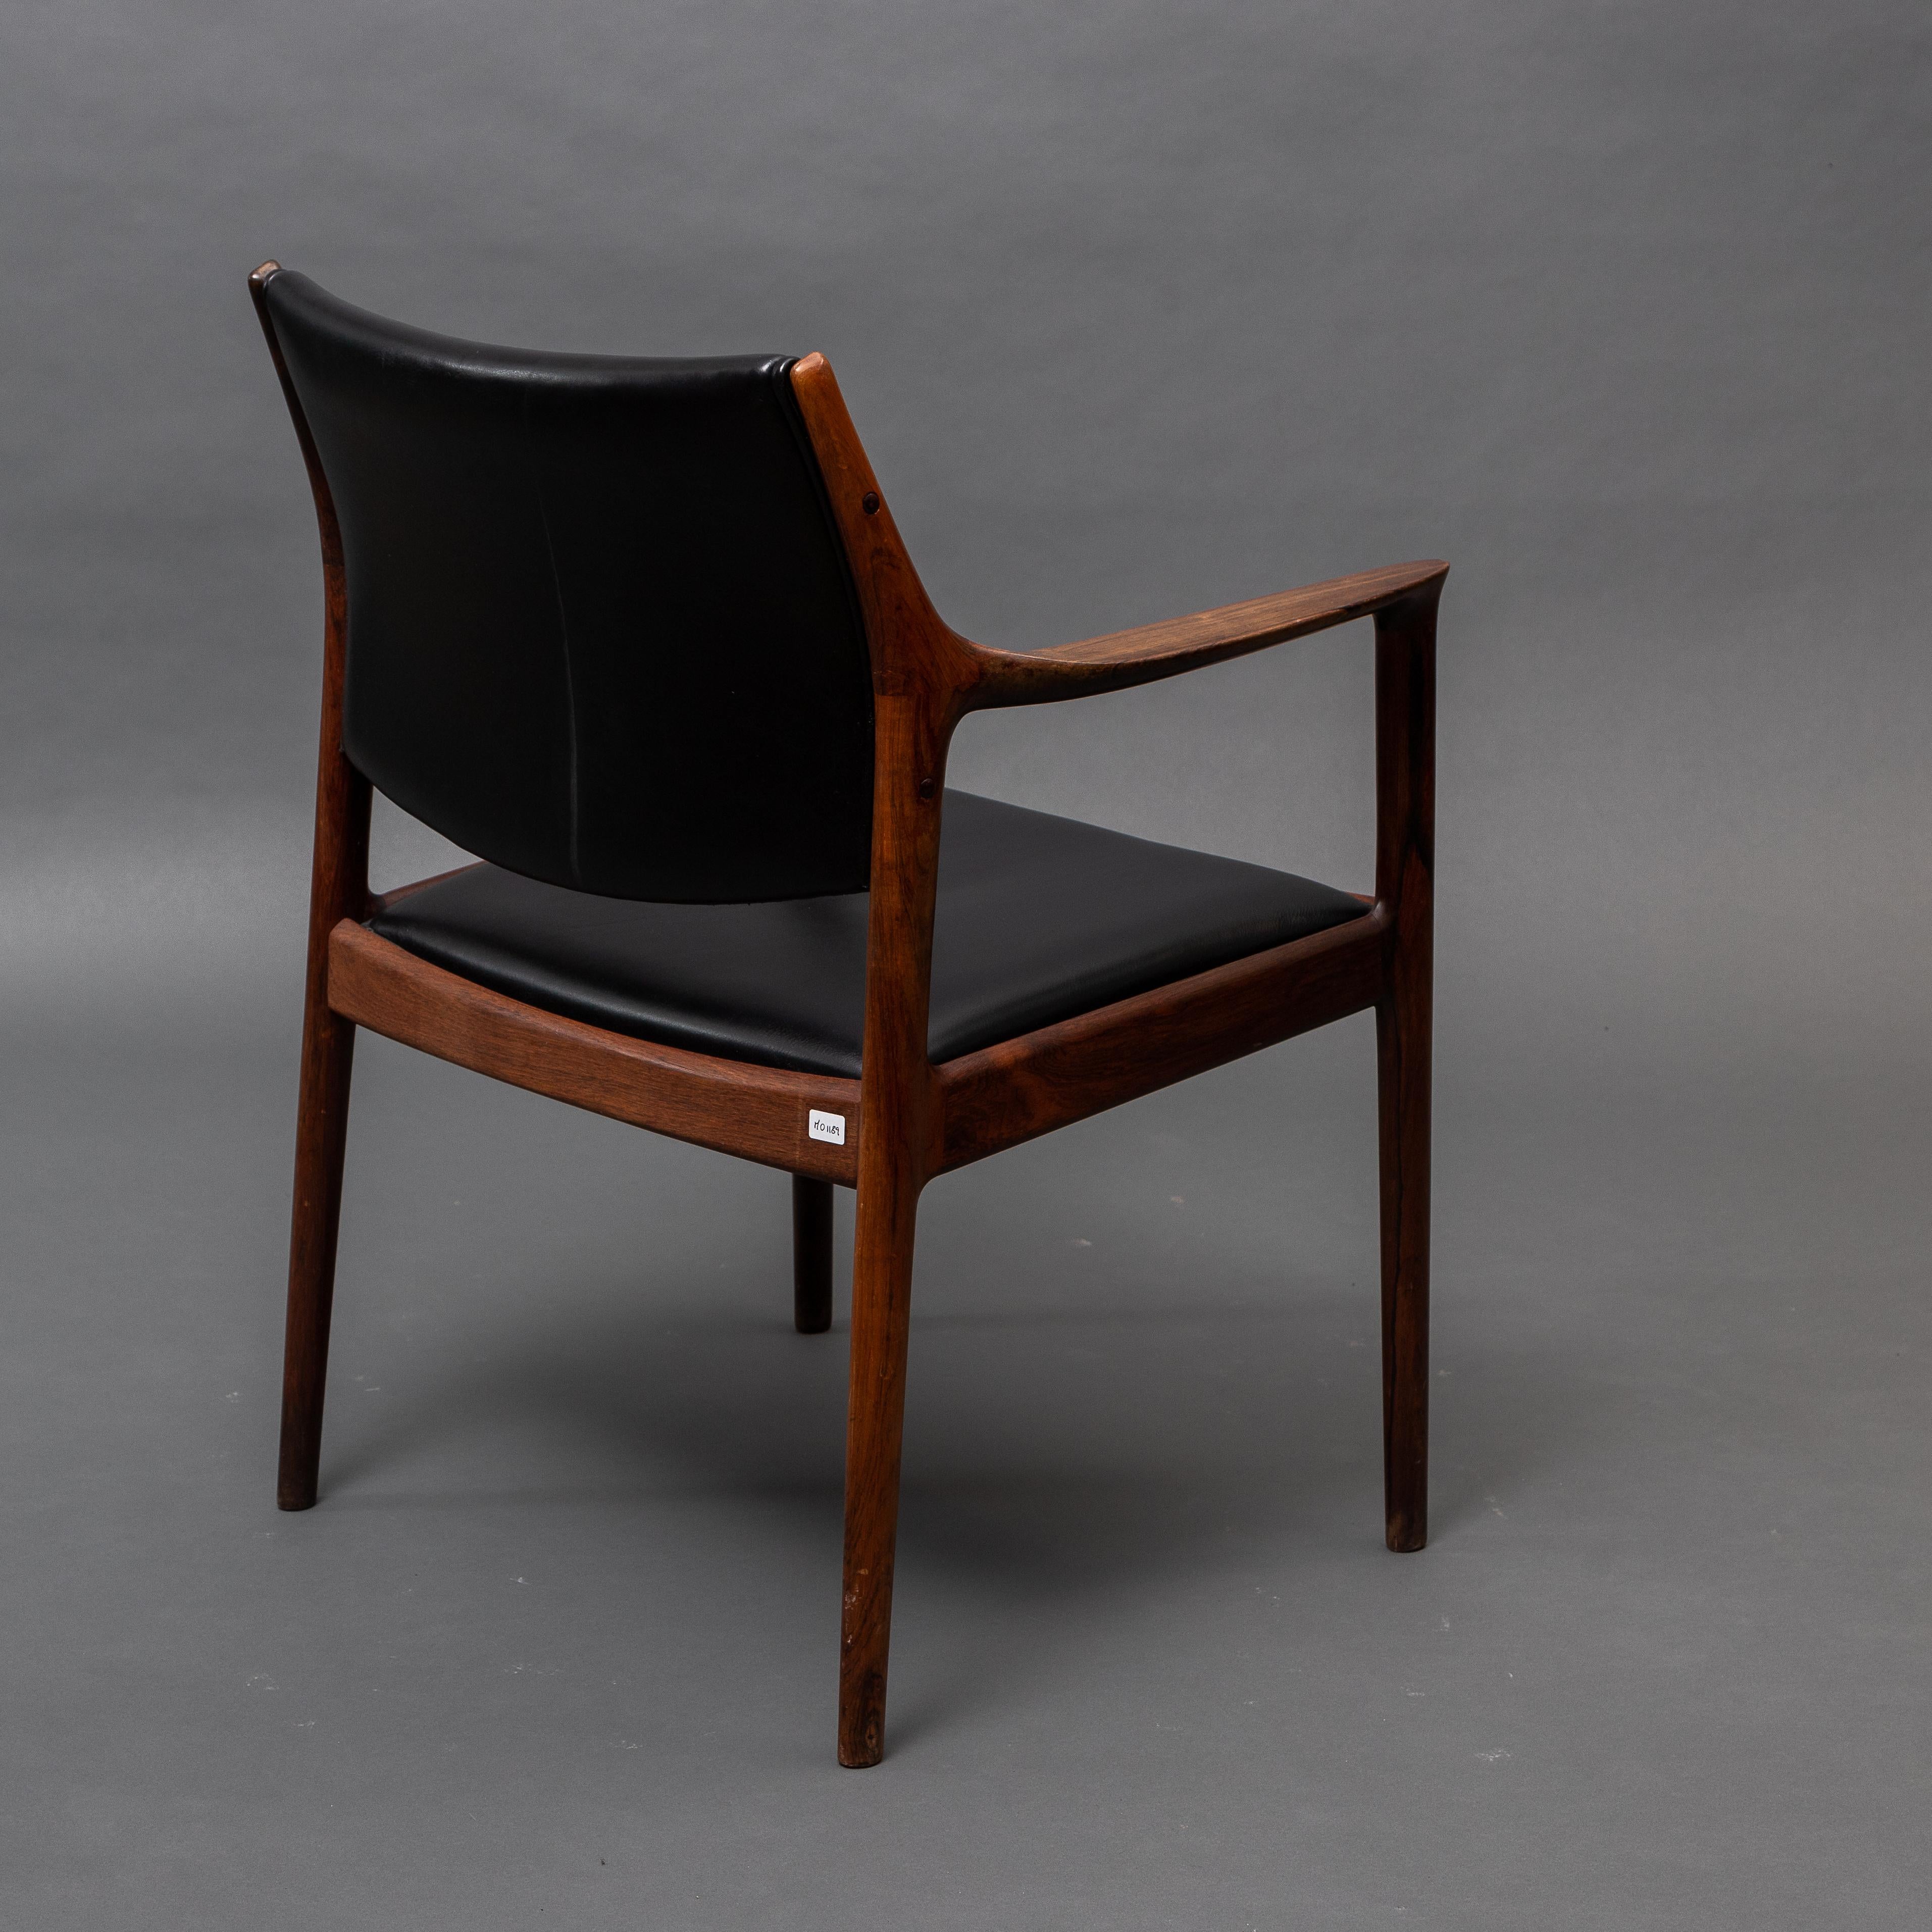 Midcentury Scandinavian Torbjørn Afdal Elton armchair in rosewood black leather.
Manufactured by Nesjestanda møbelfabrikk Norway 1960s.
Newly upholstered with Anilin black leather.
 